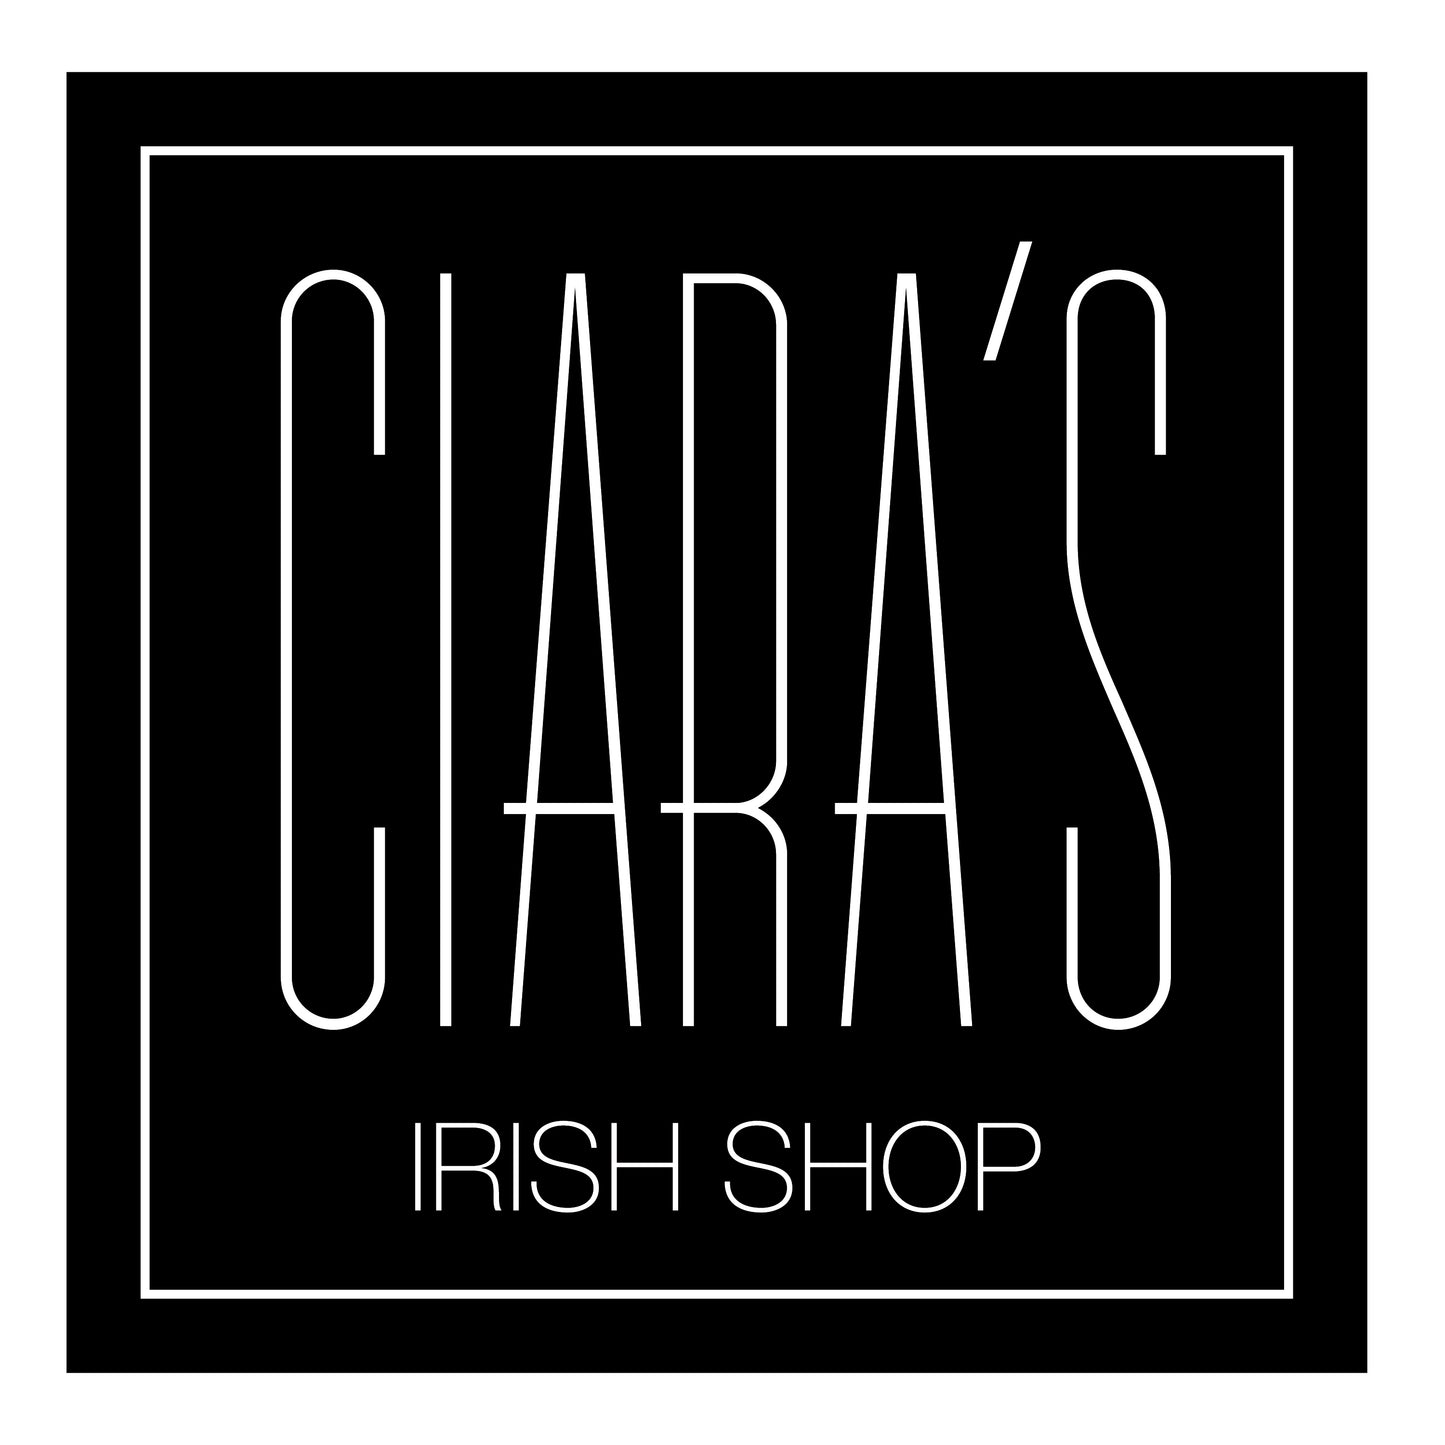 Ciara's Irish Shop Gift Card